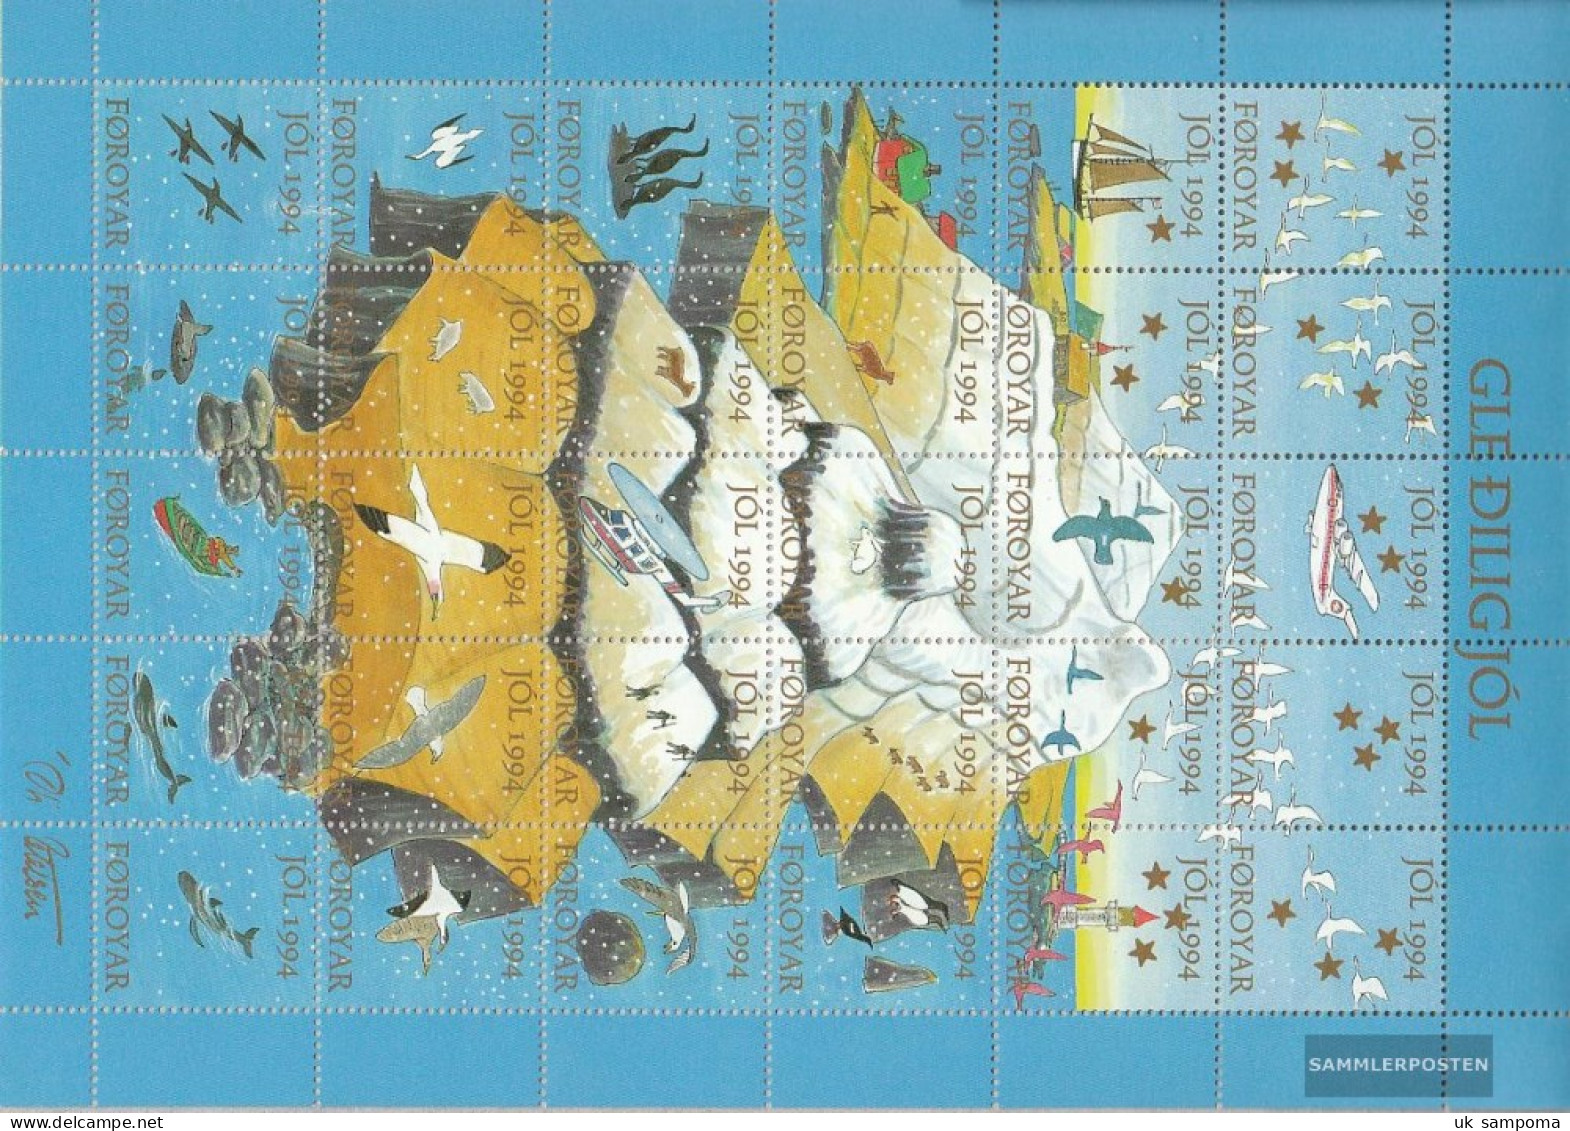 Denmark - Faroe Islands Sheetlet Vignette Unmounted Mint / Never Hinged 1994 Christmas Brands - Färöer Inseln